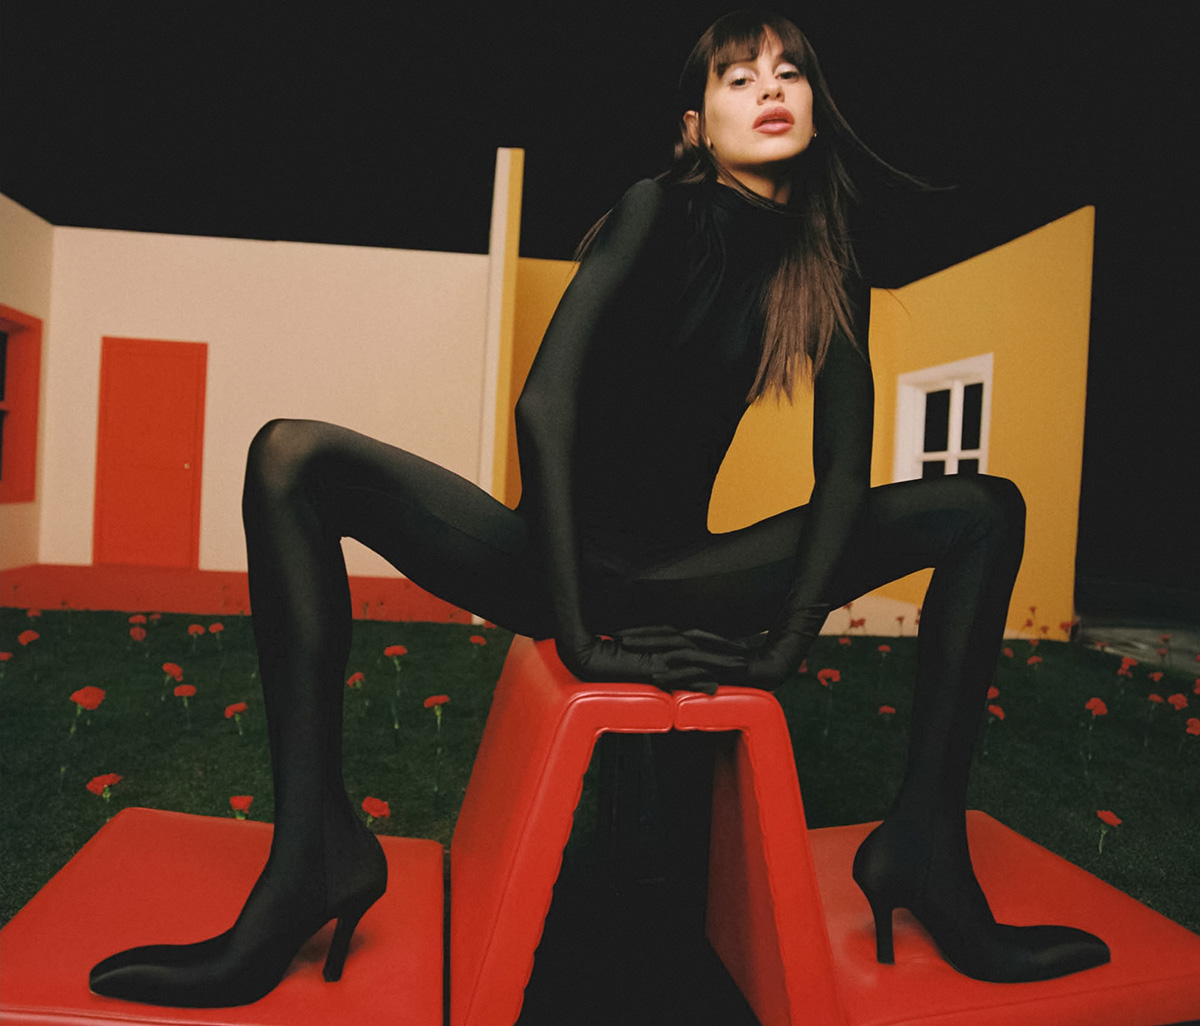 Milena Smit covers Vogue Spain February 2022 by Dan Beleiu